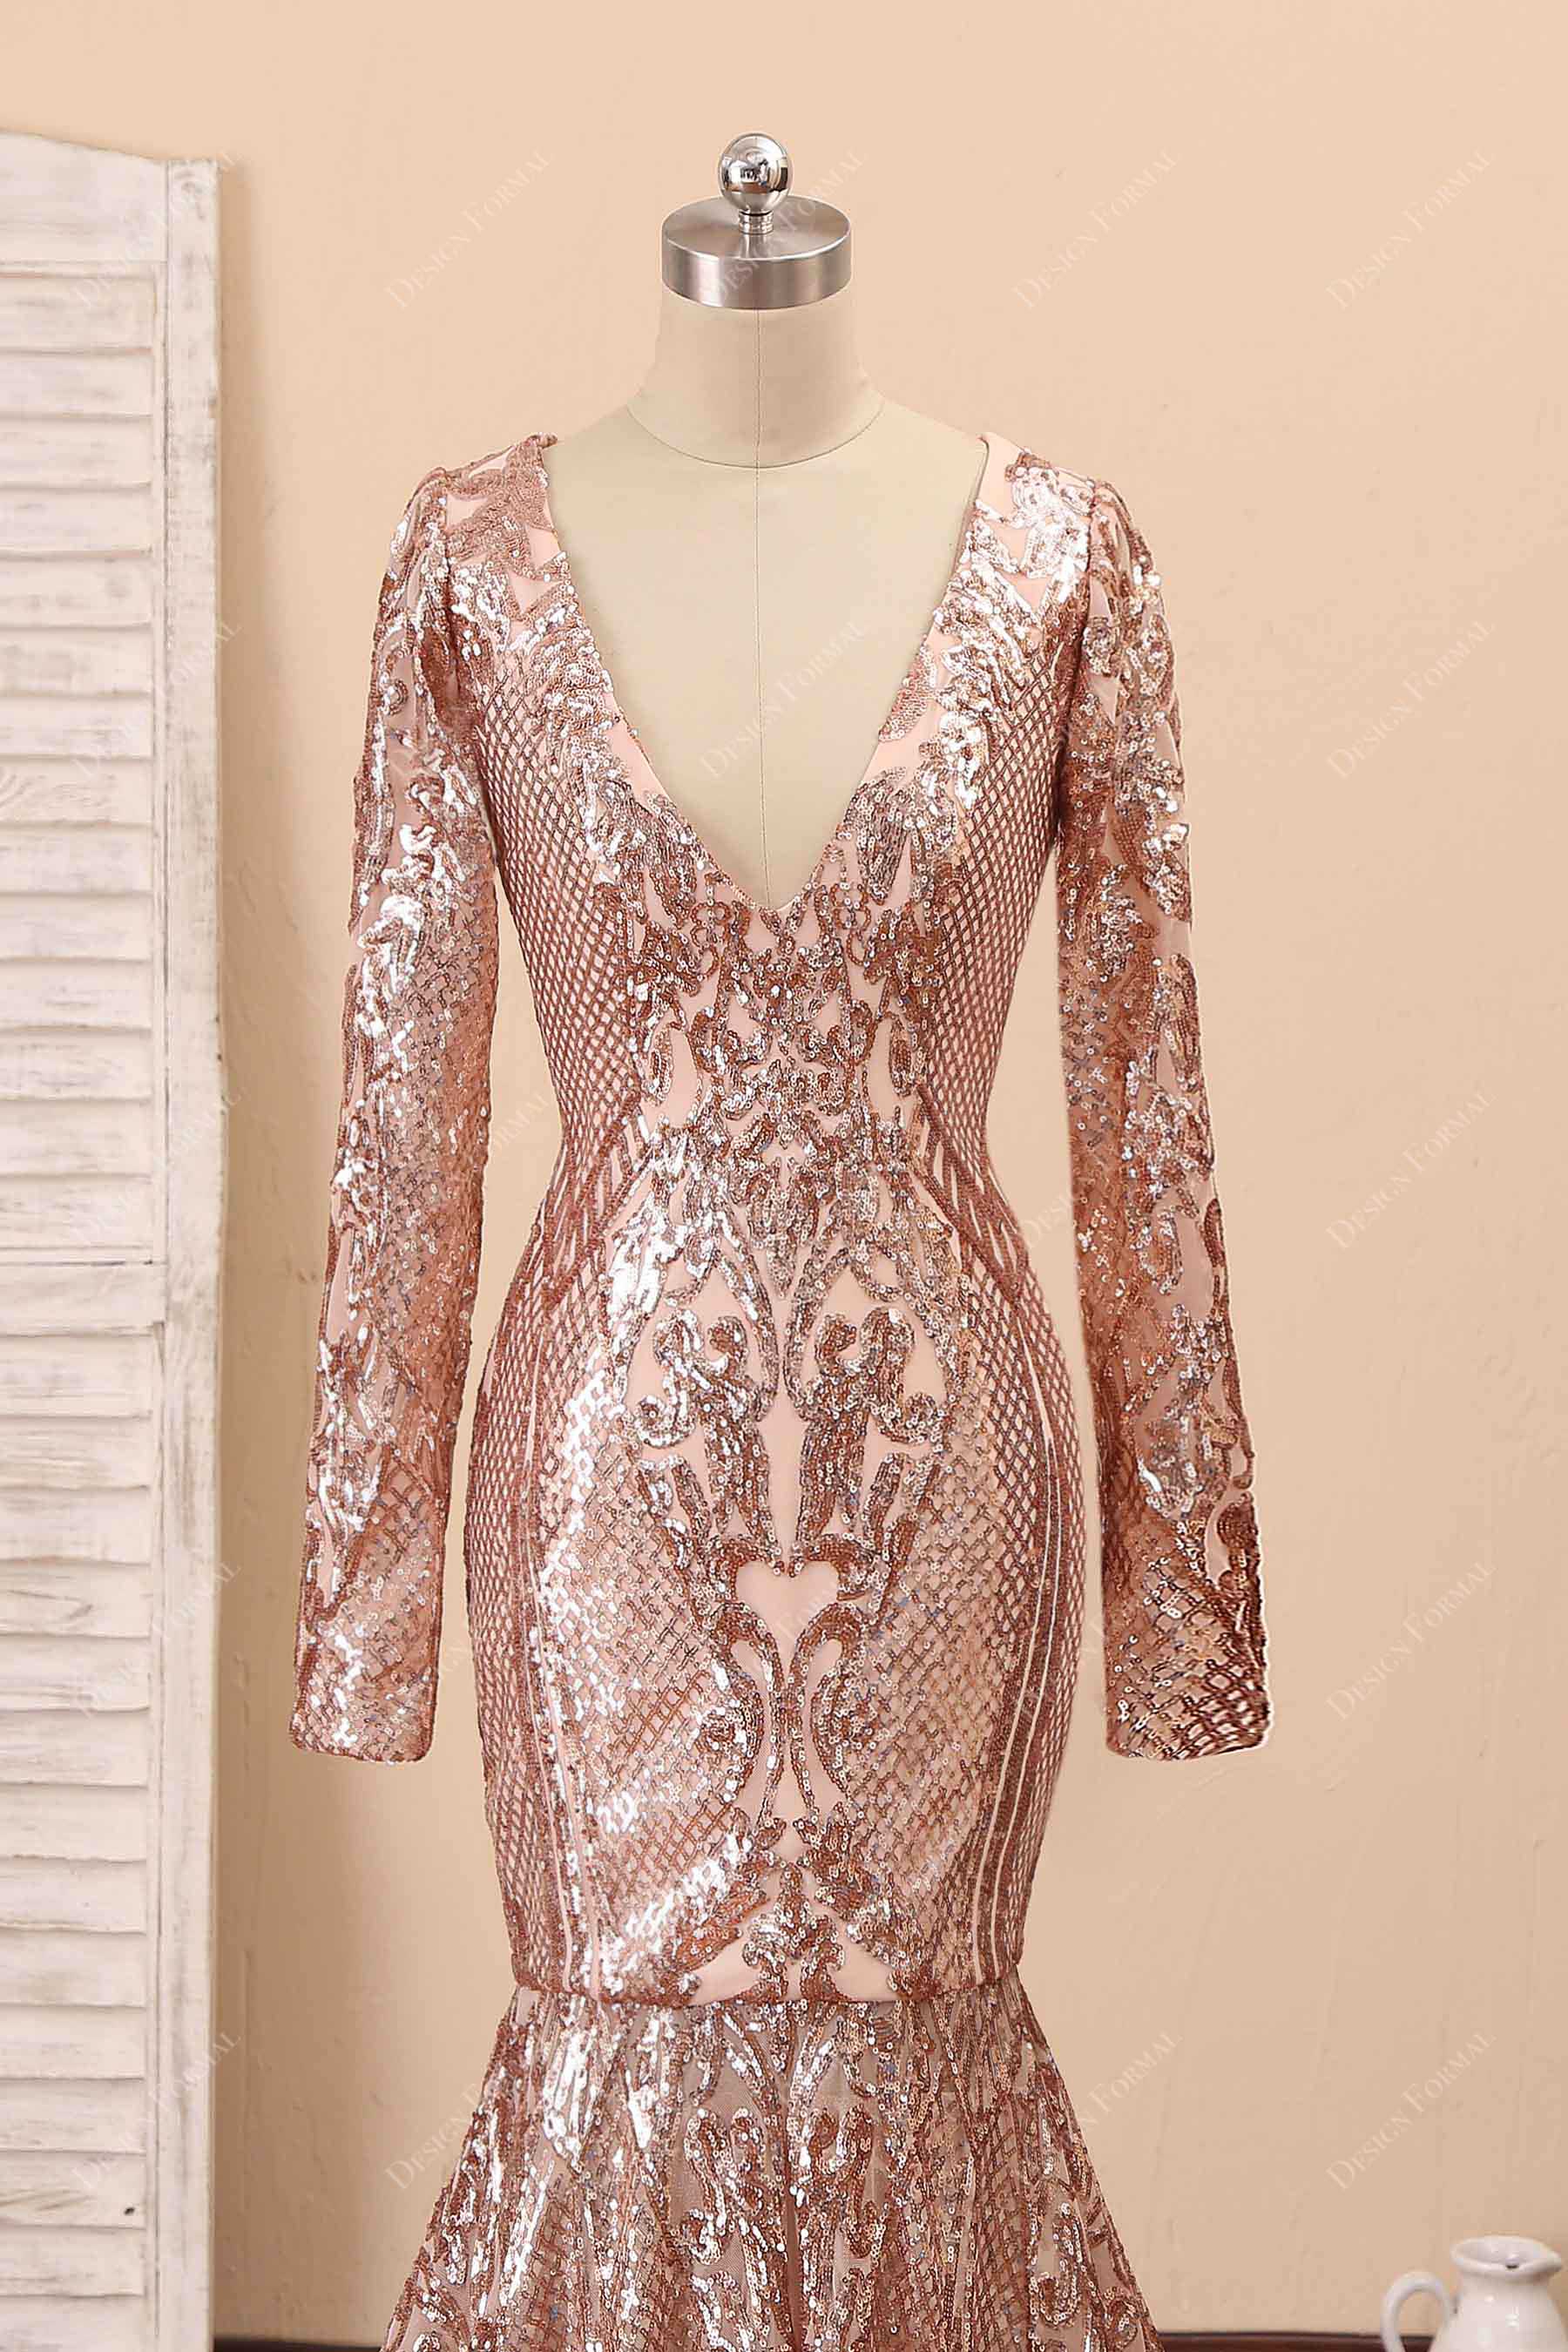 V-neck embroidery sequin rose gold prom dress